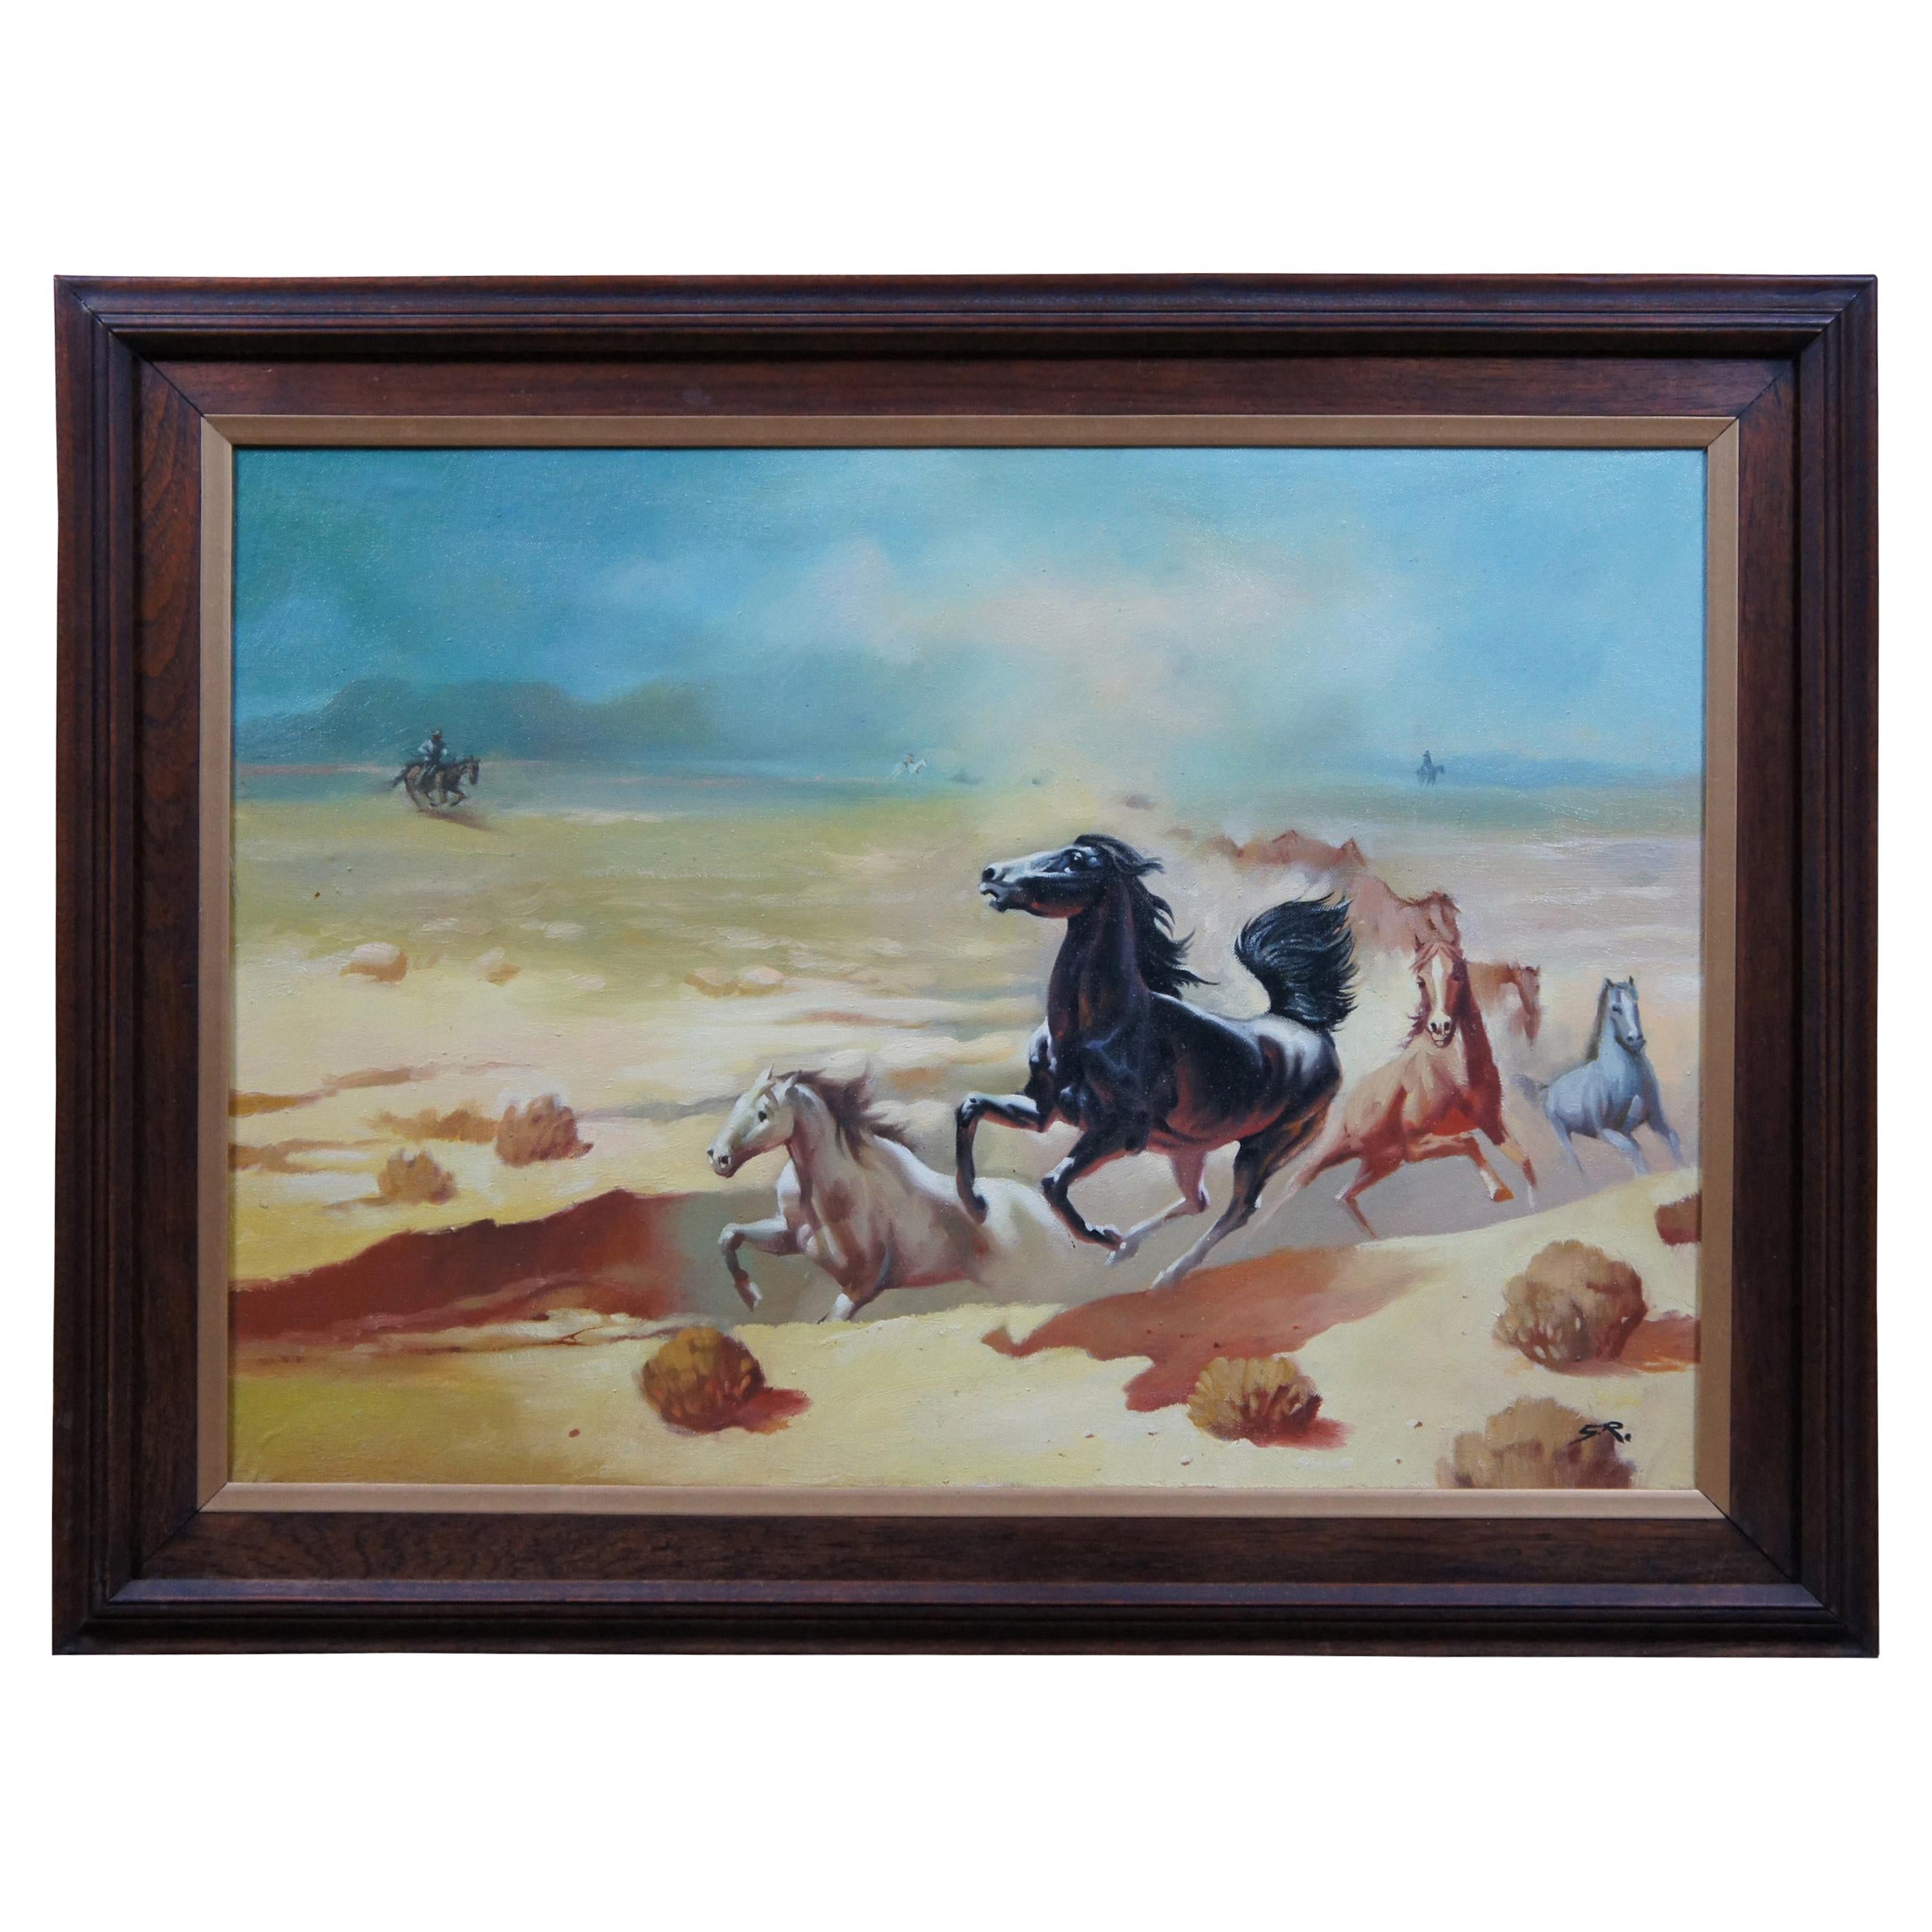 Original Oil Painting on Canvas Running Wild Horses Desert Landscape Western